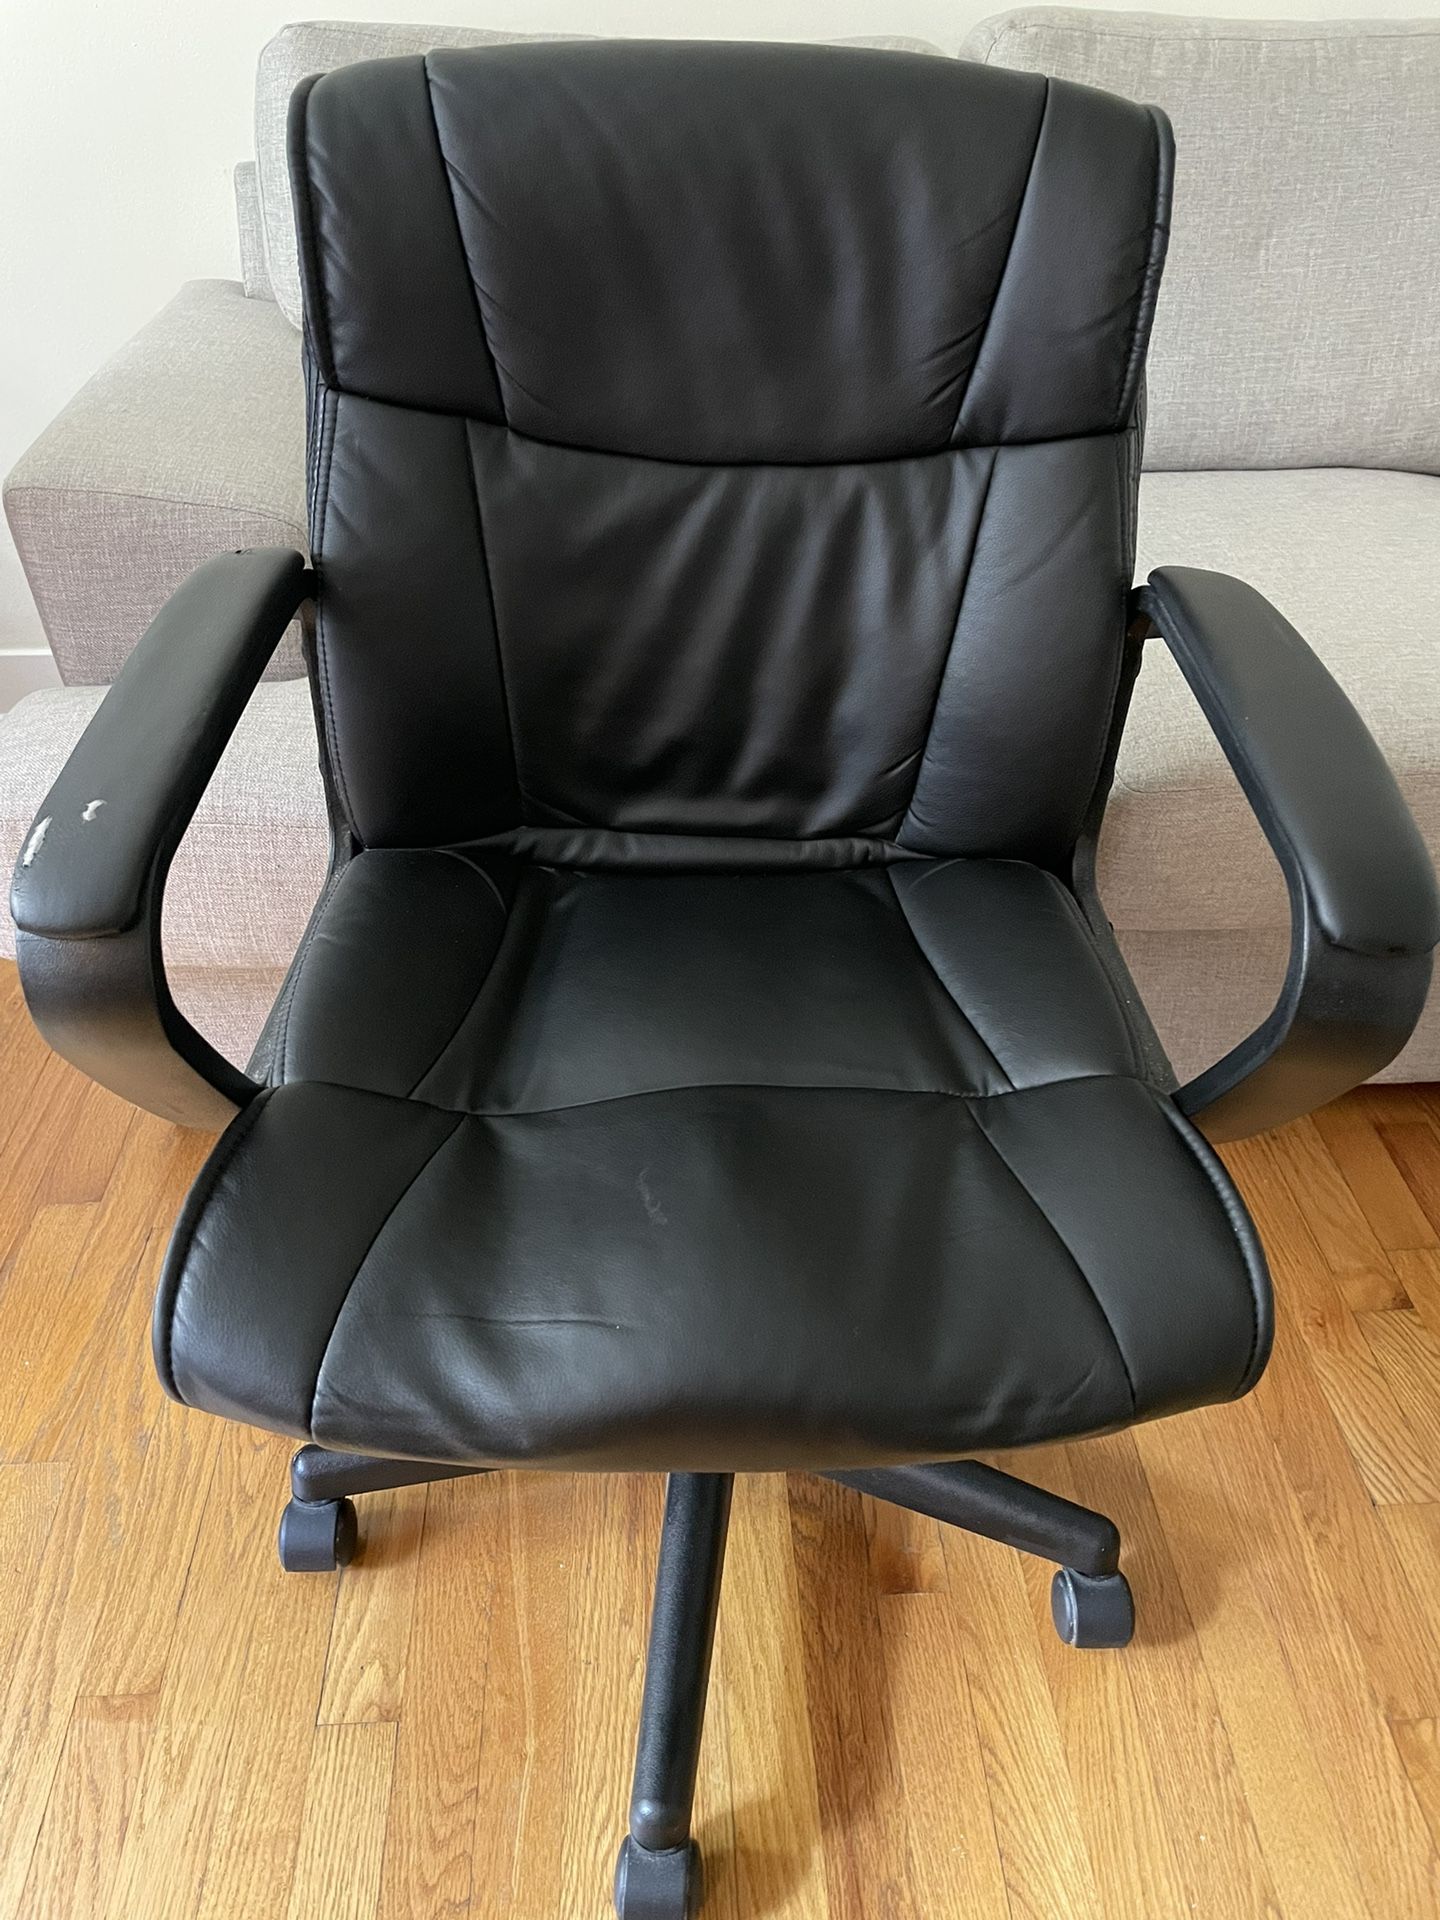 Ergonomic Office Chair - Good Condition 